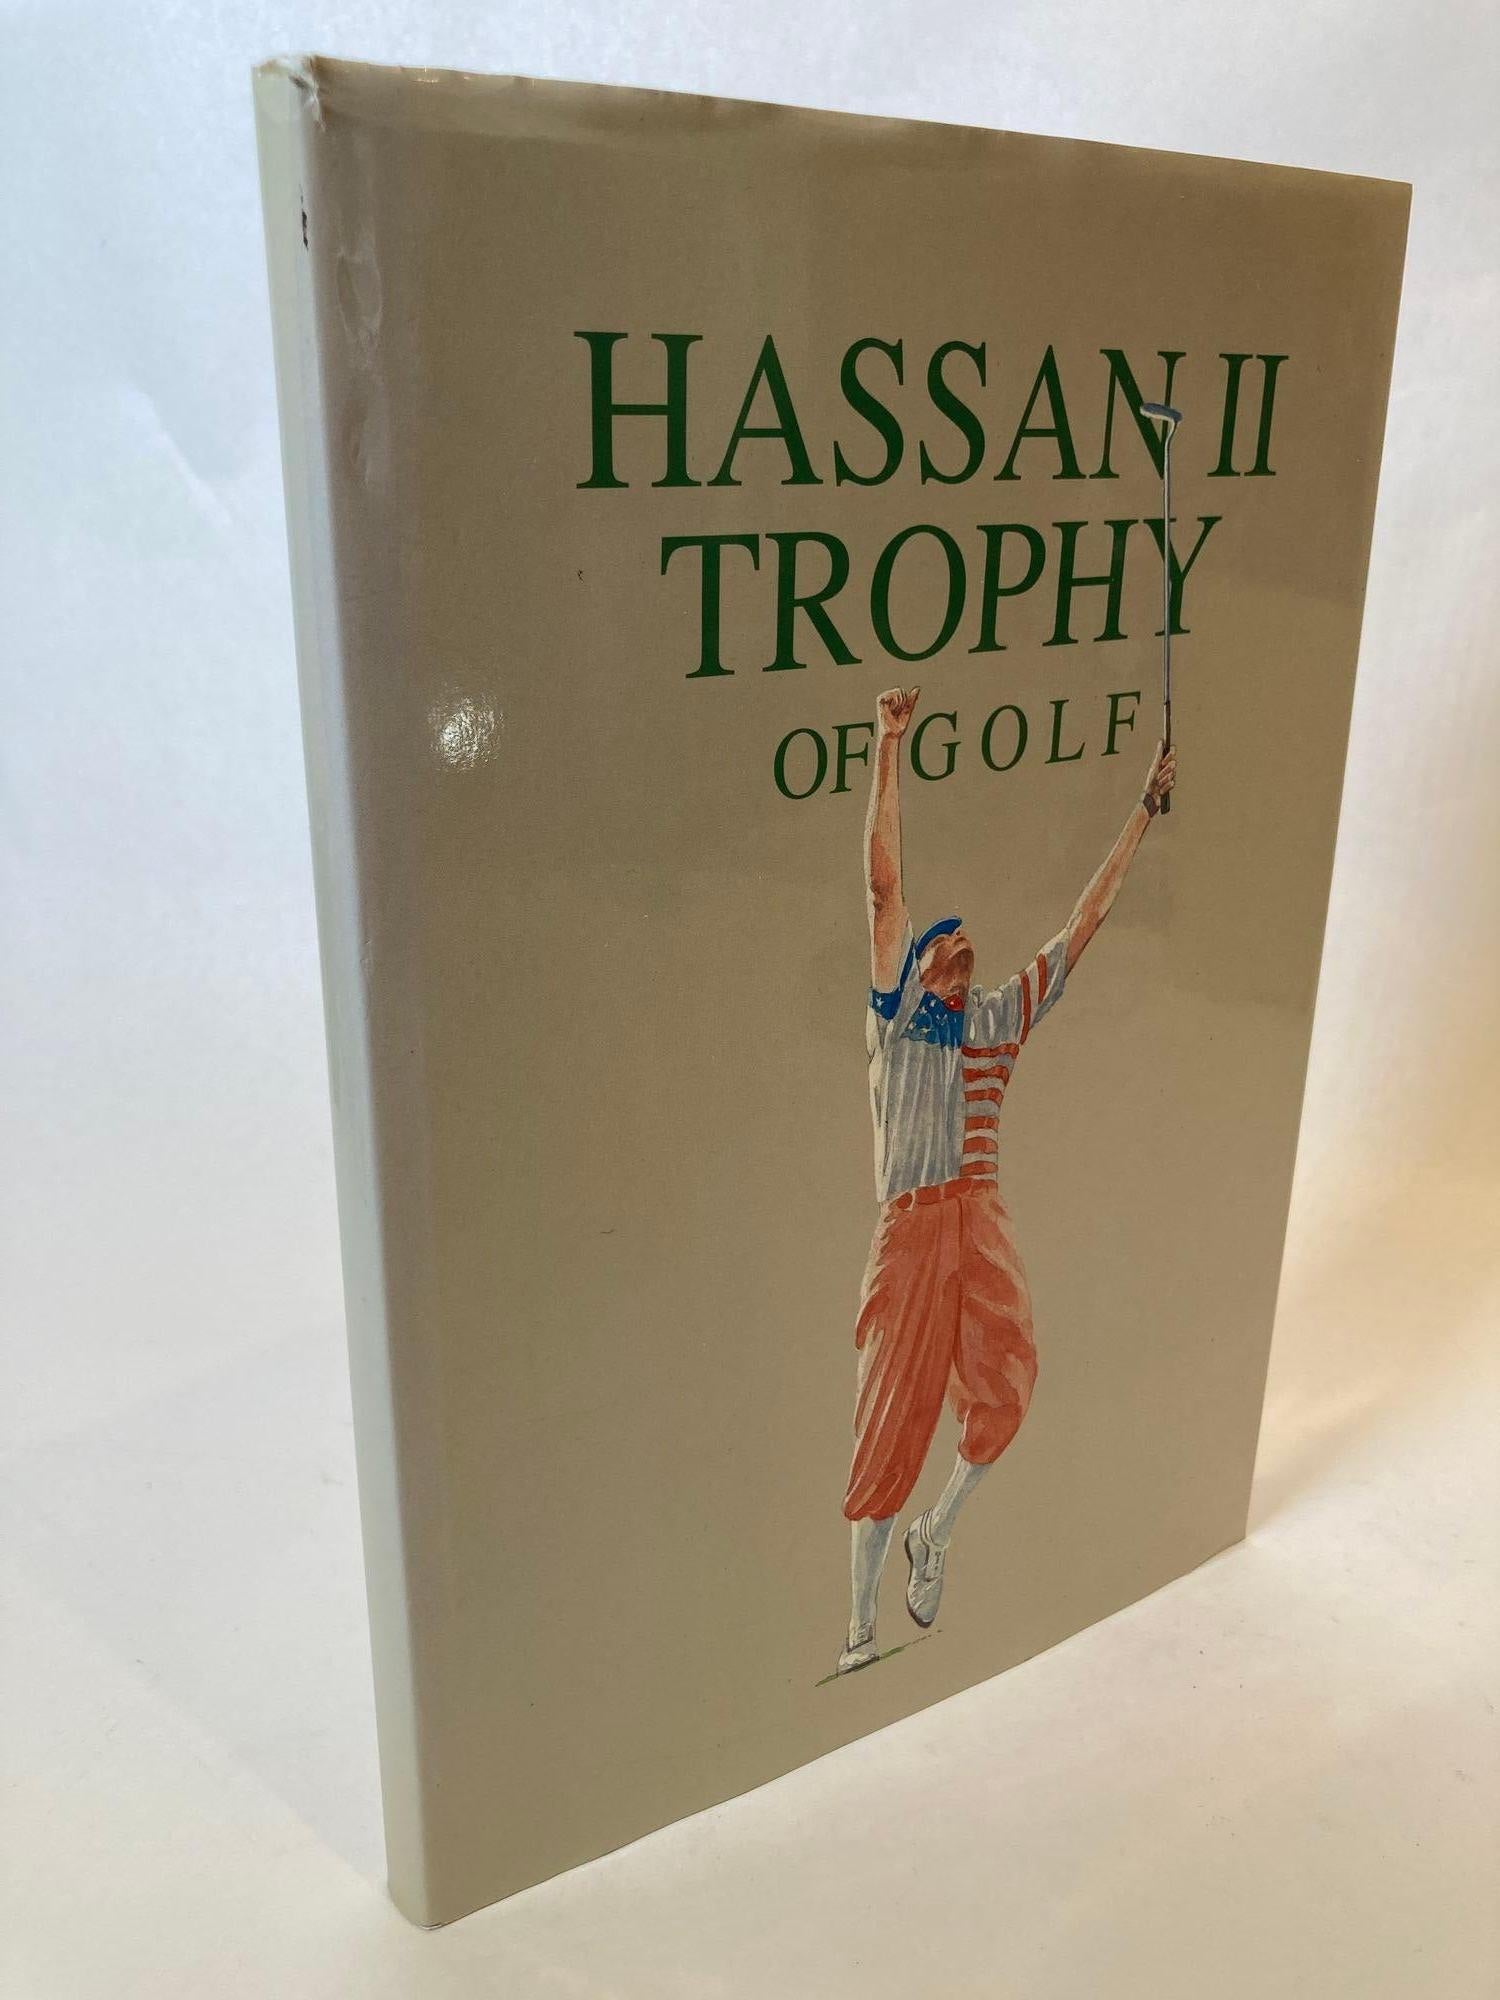 Moorish Hassan II Trophy of Golf Hardcover Book Casablanca, Morocco, 1993